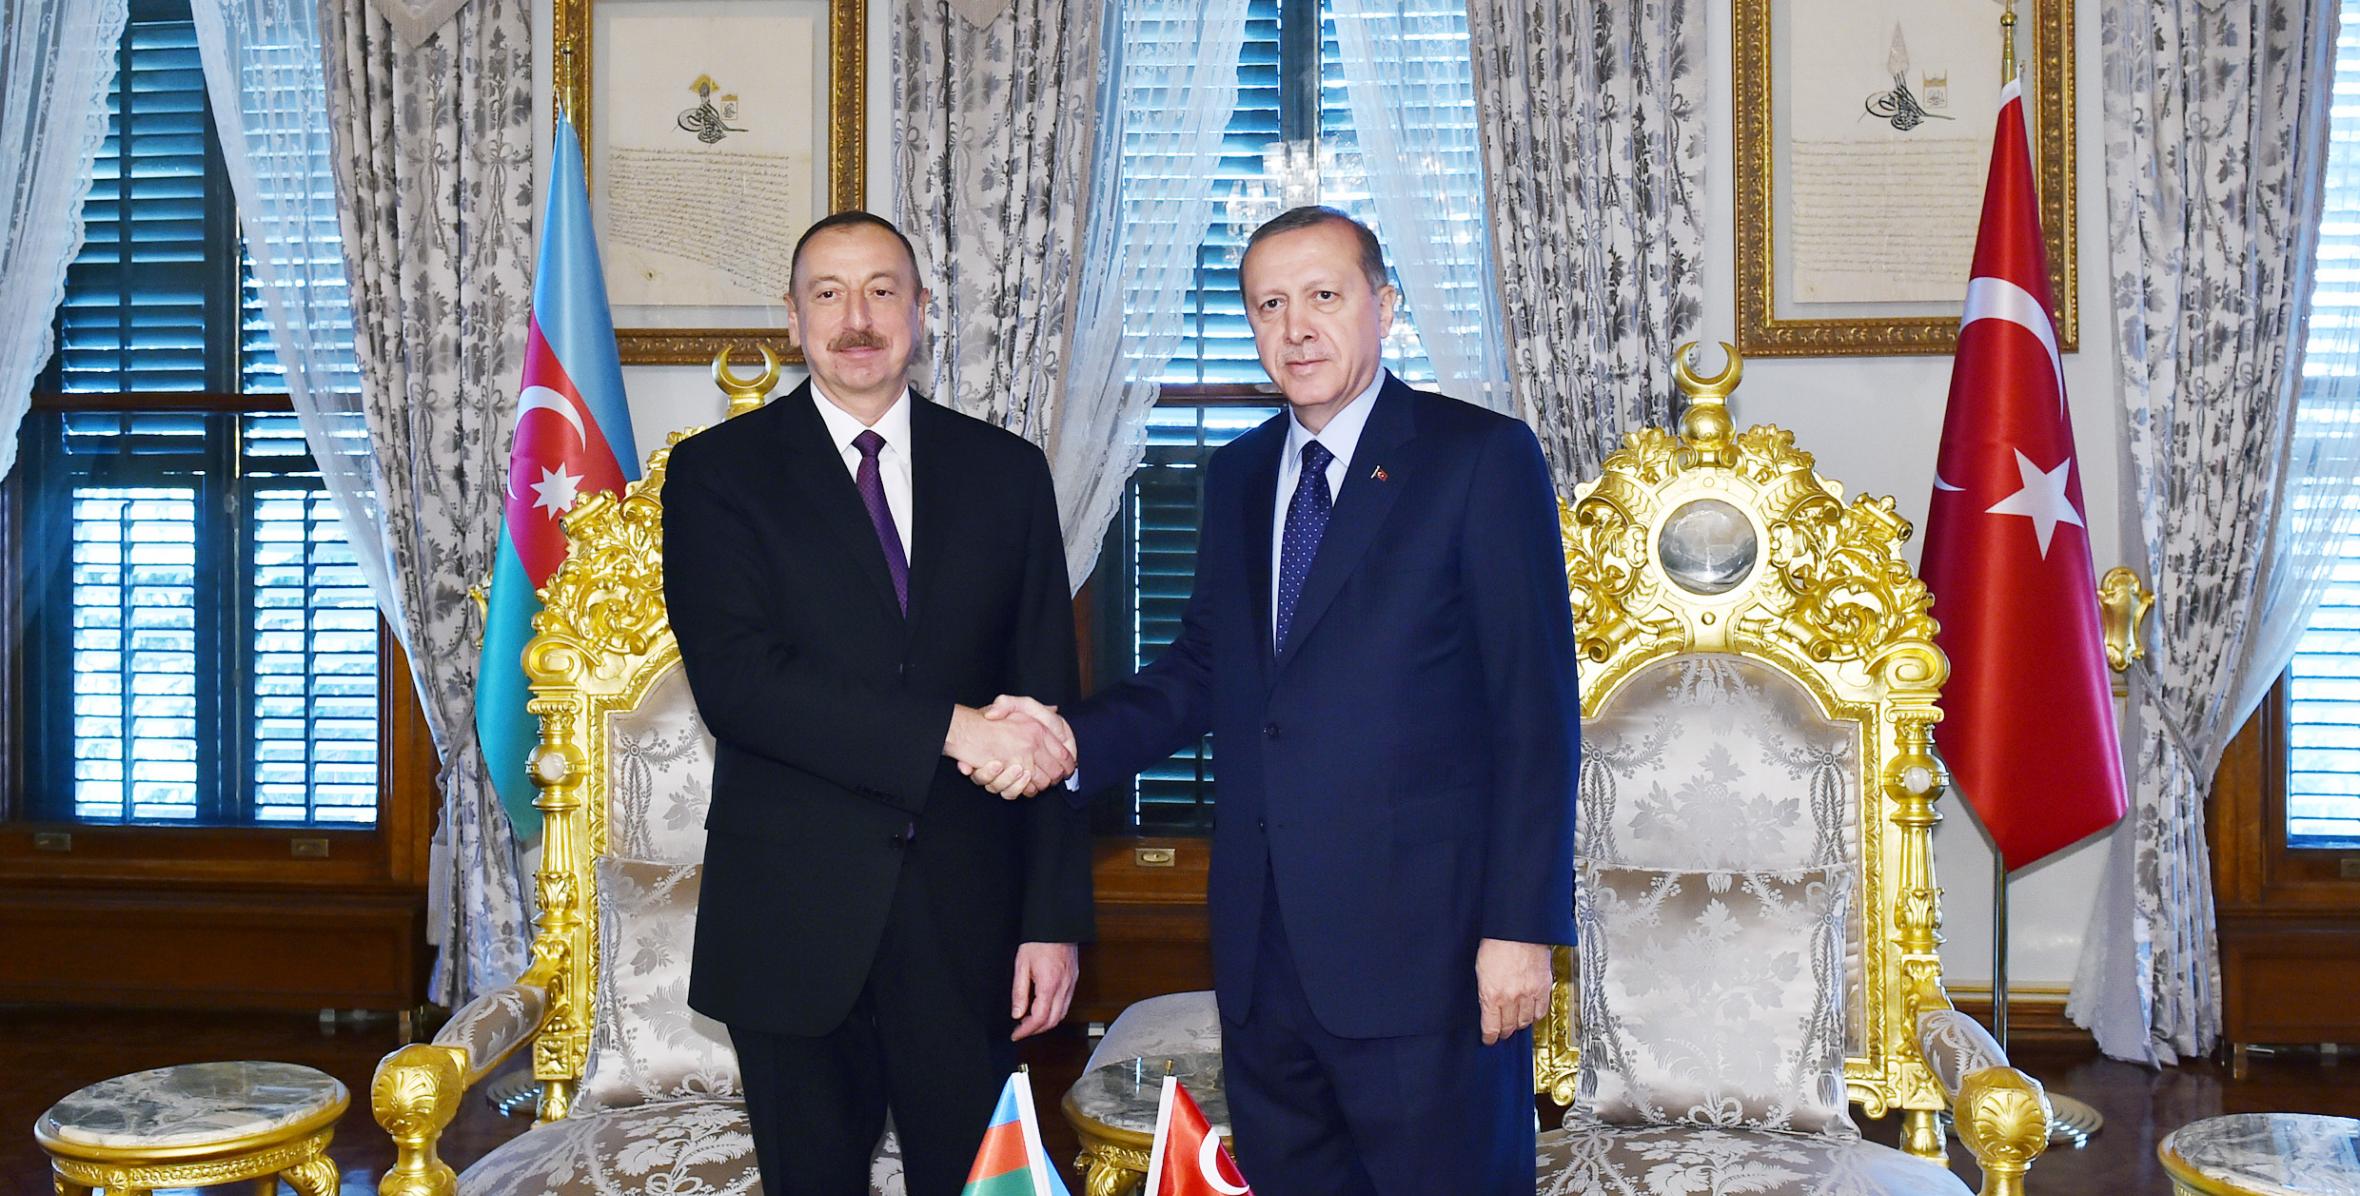 Ilham Aliyev has met with President of the Republic of Turkey Recep Tayyip Erdogan in Istanbul